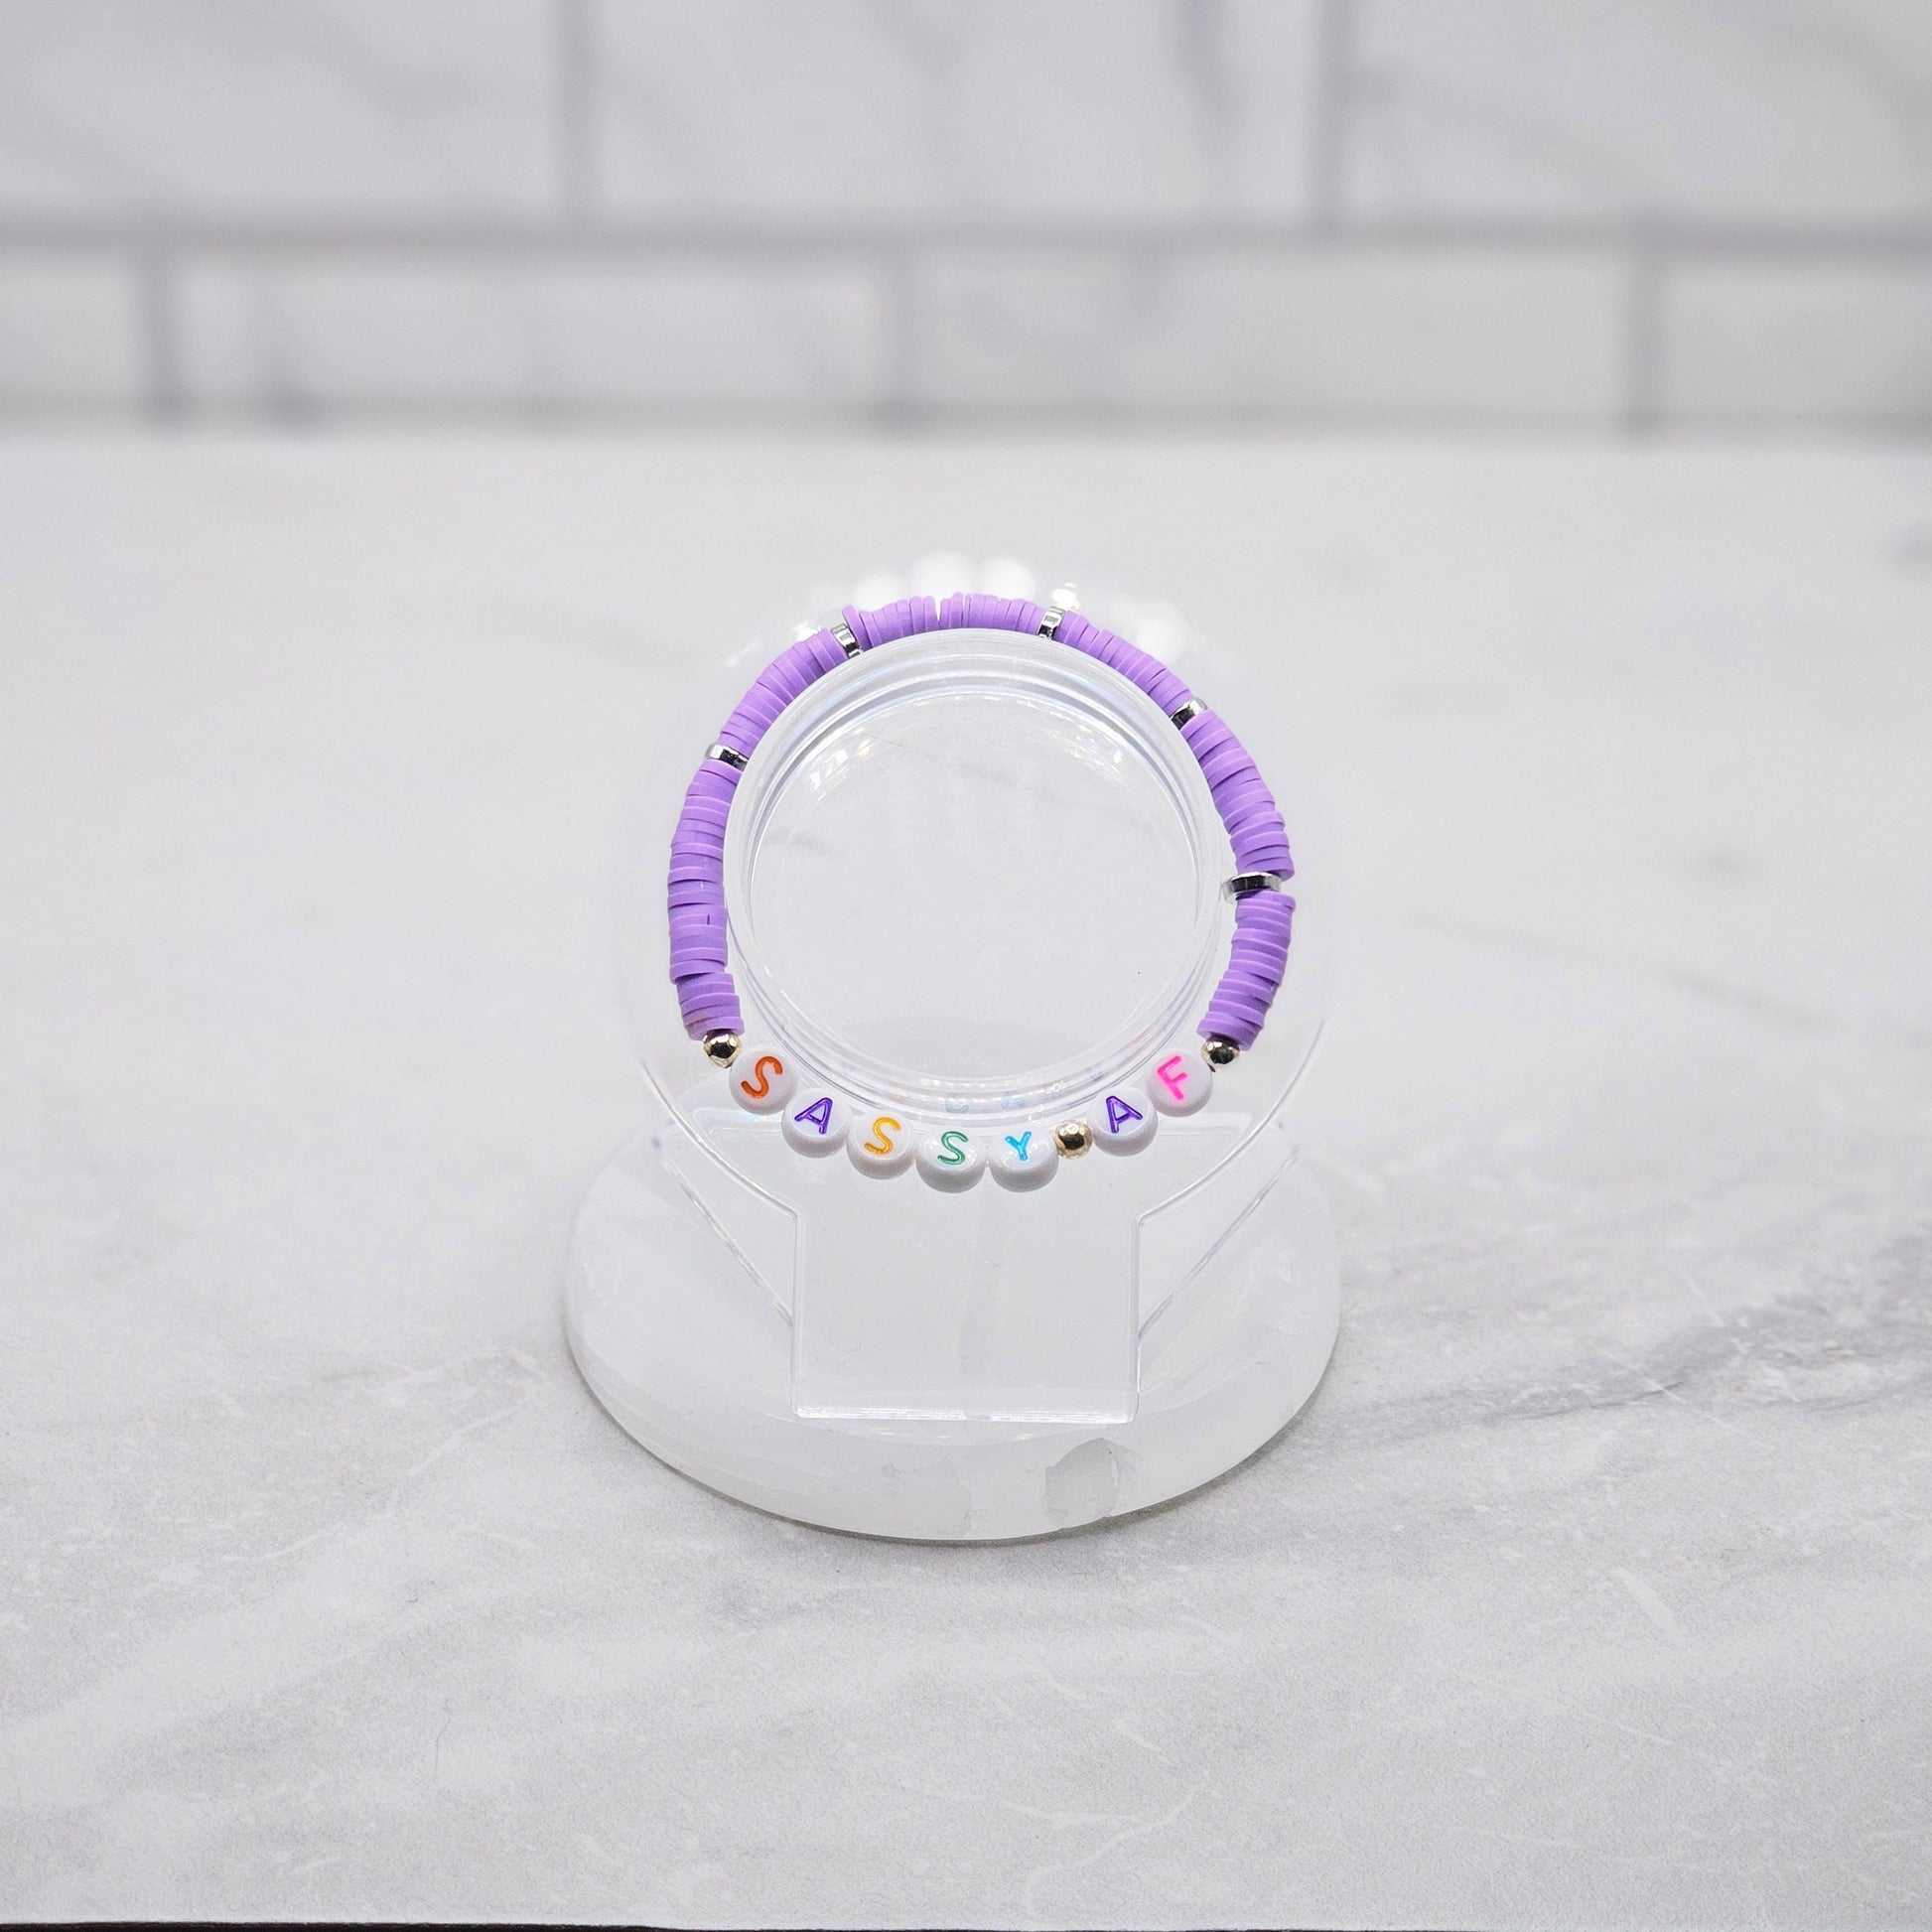 sassy af purple beaded word bracelet - braceliss